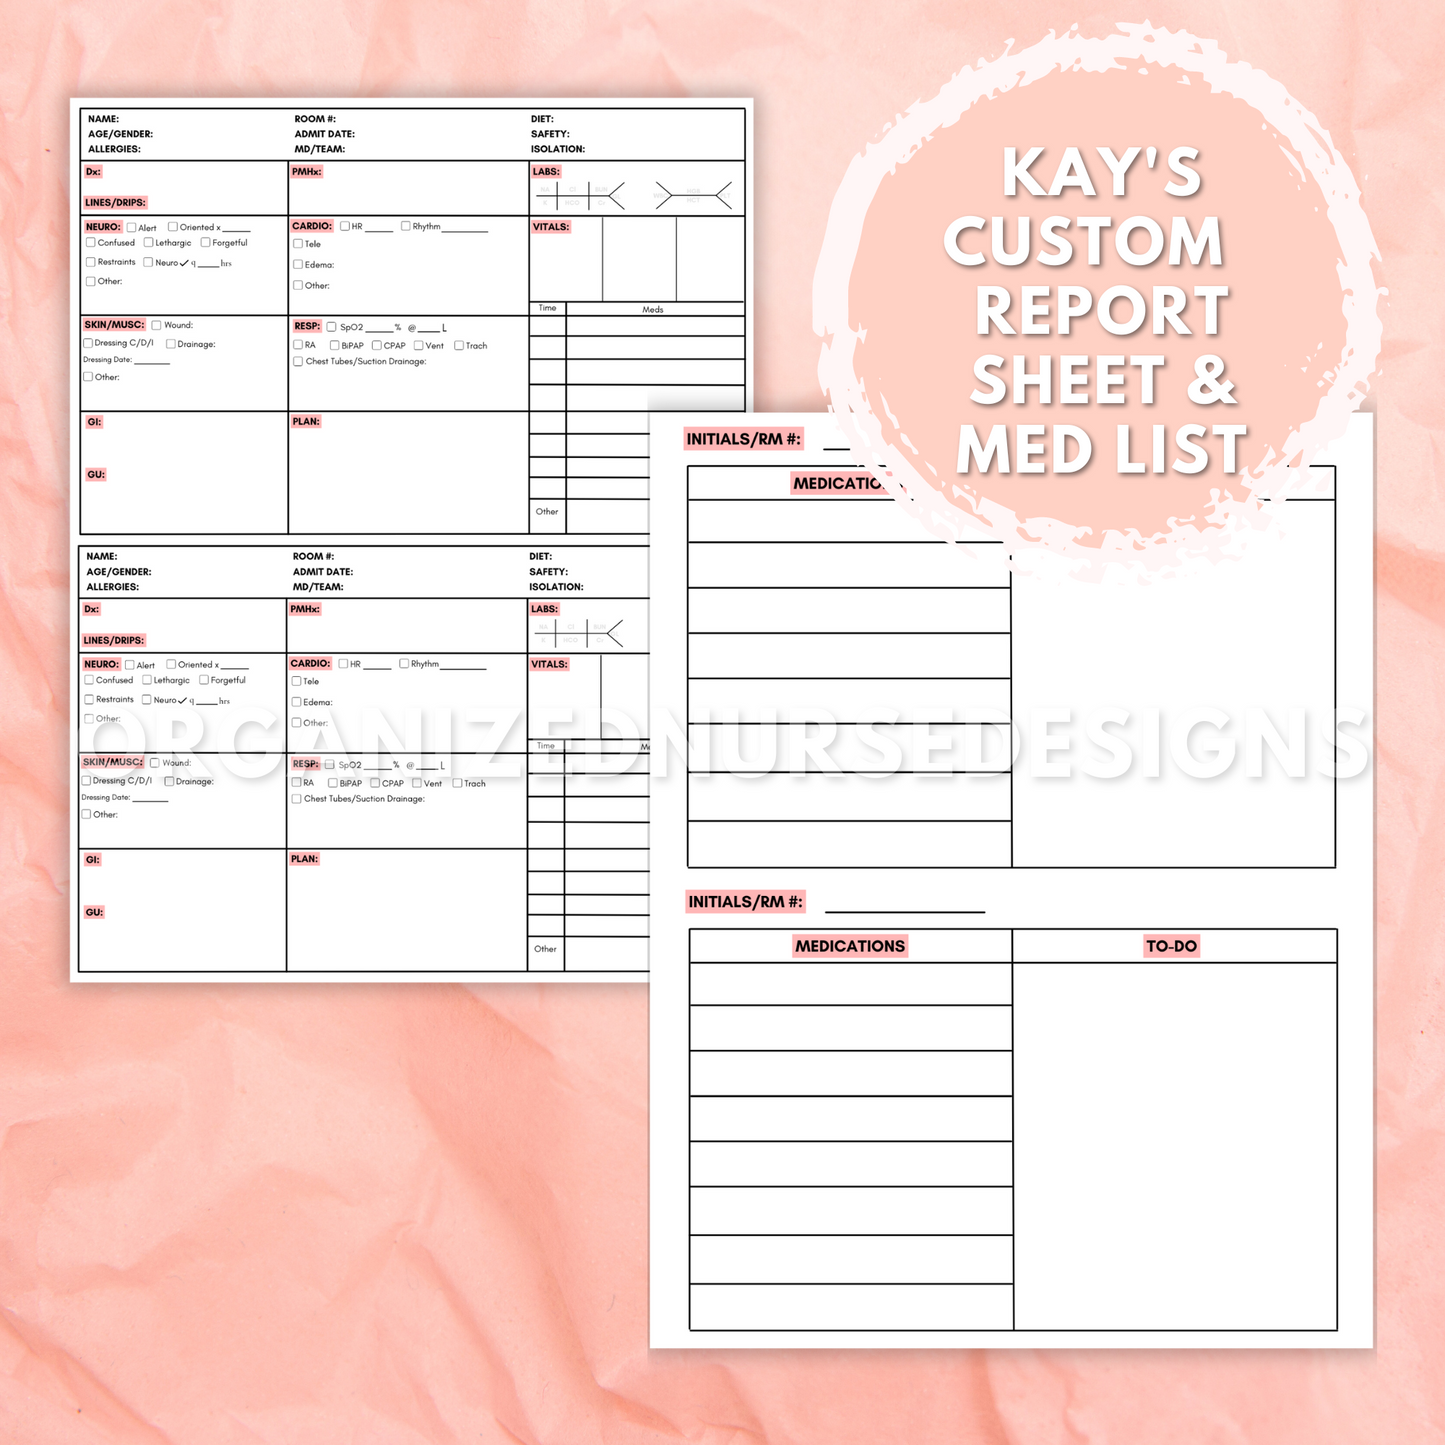 custom nurse report sheet, pharmacology template, nursing study template